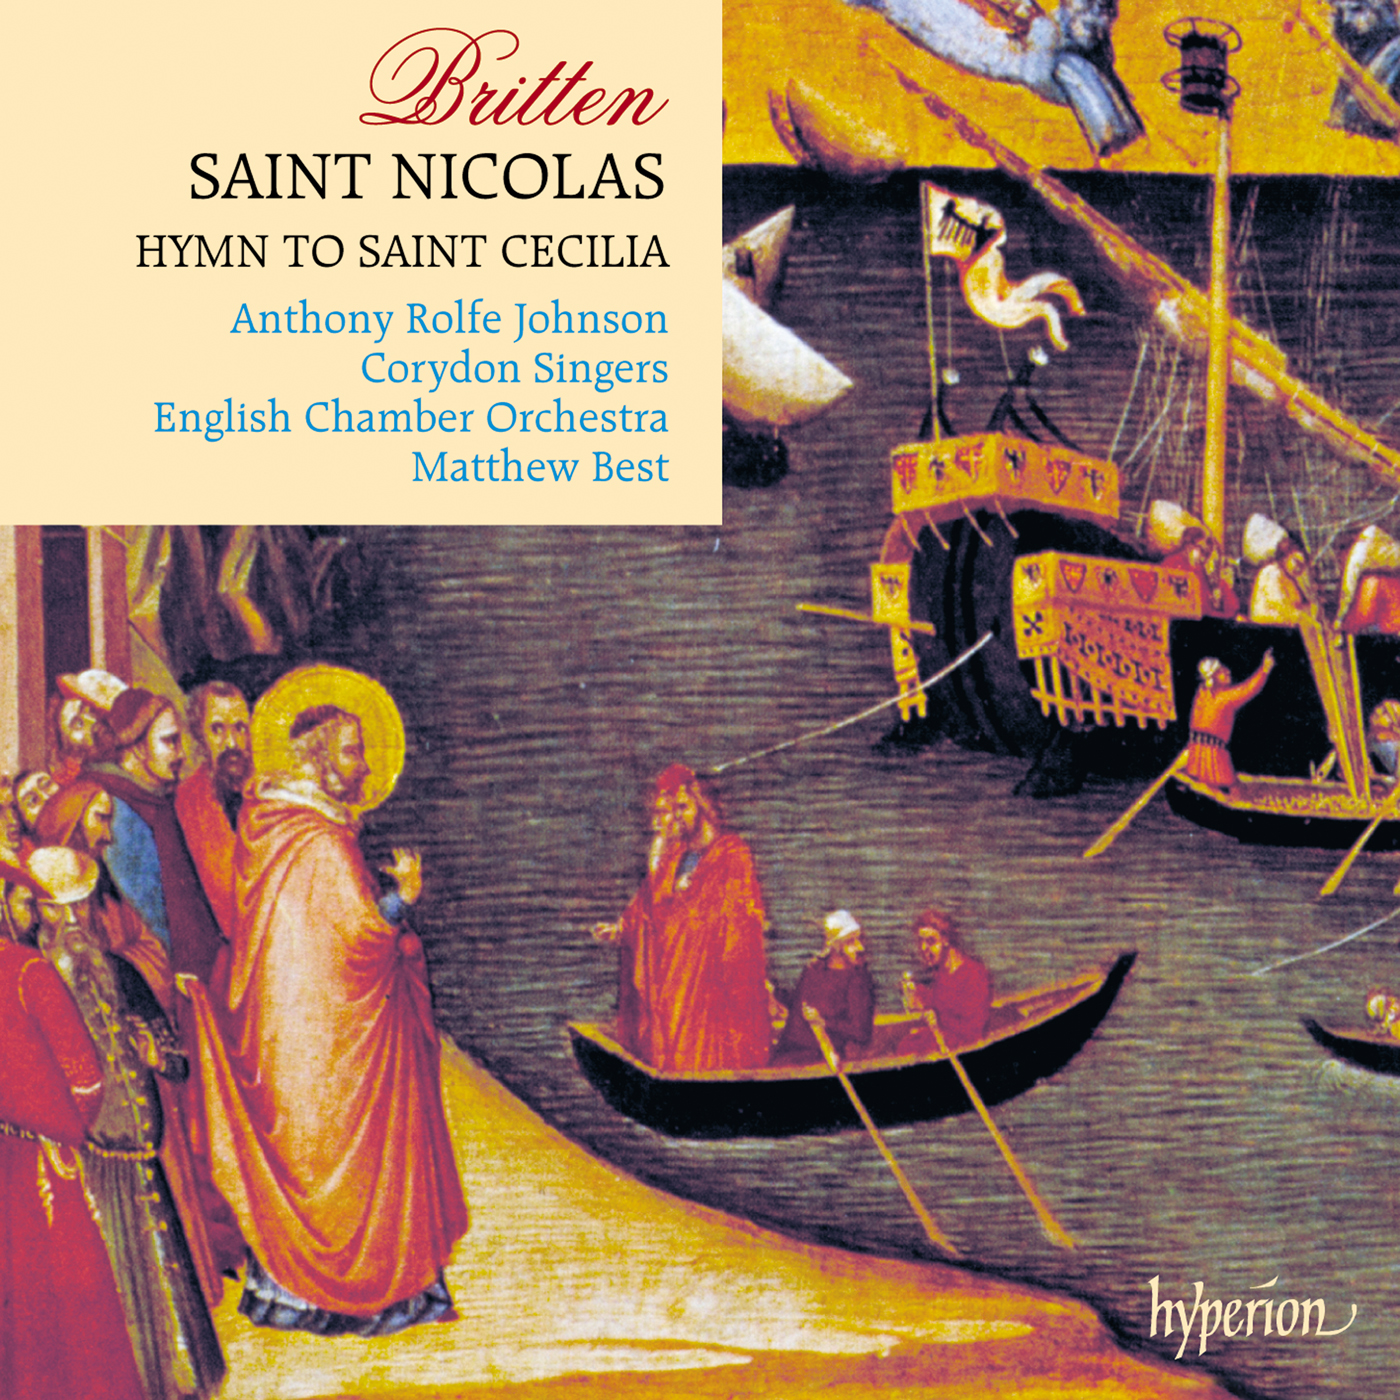 Britten: Saint Nicolas & Hymn to Saint Cecilia